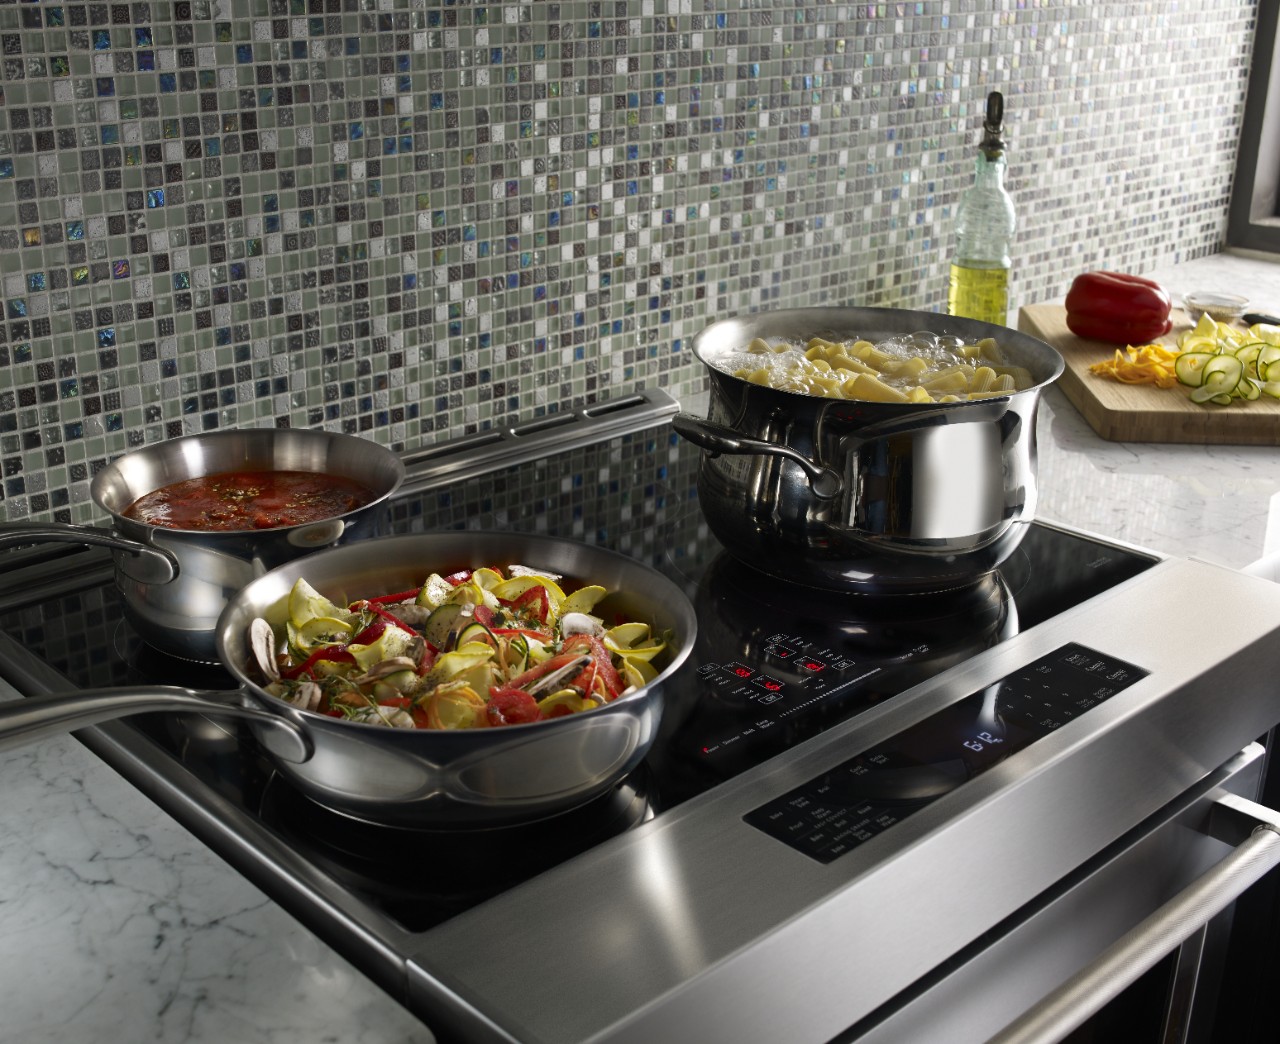 Find sleek, performance cooking sets at KitchenAid.